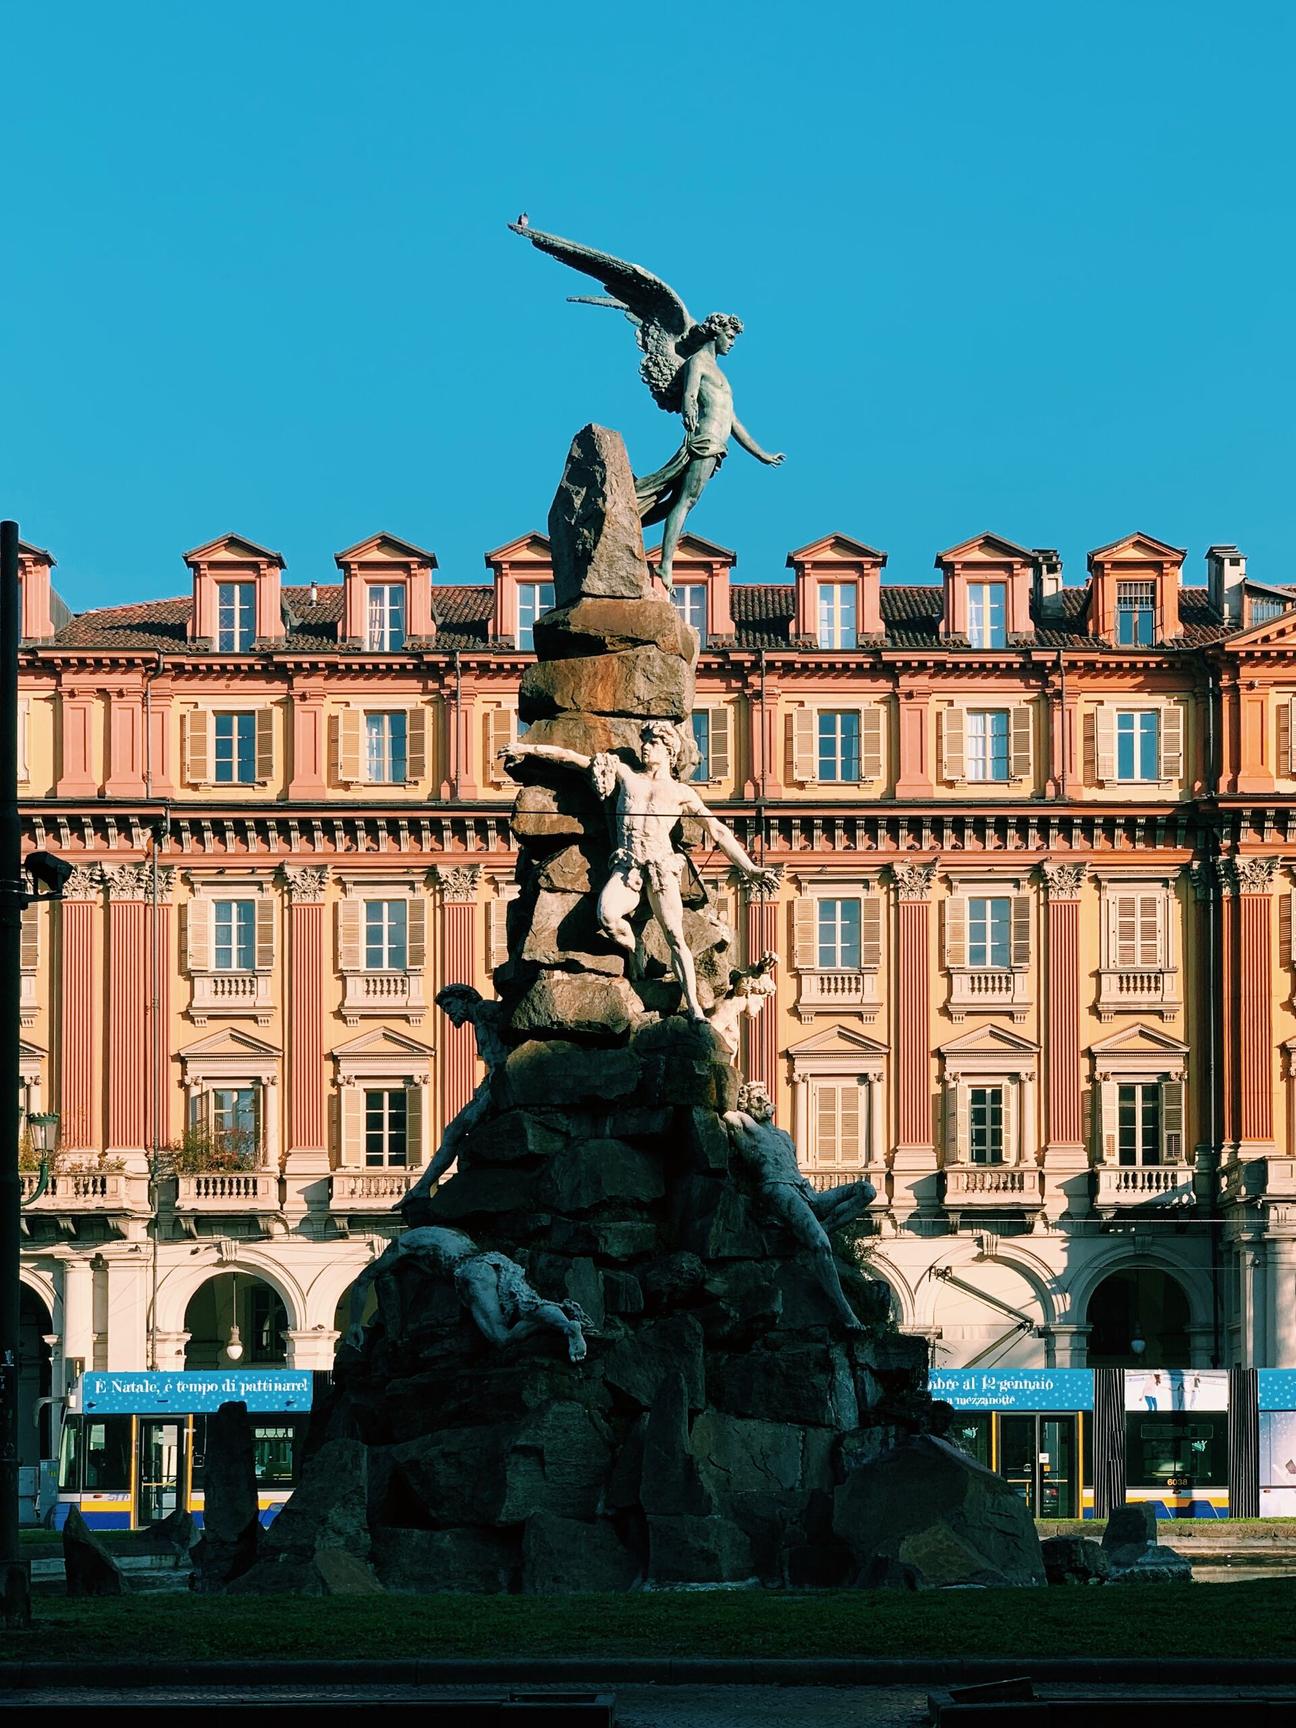 A photo of Piazza Statuto